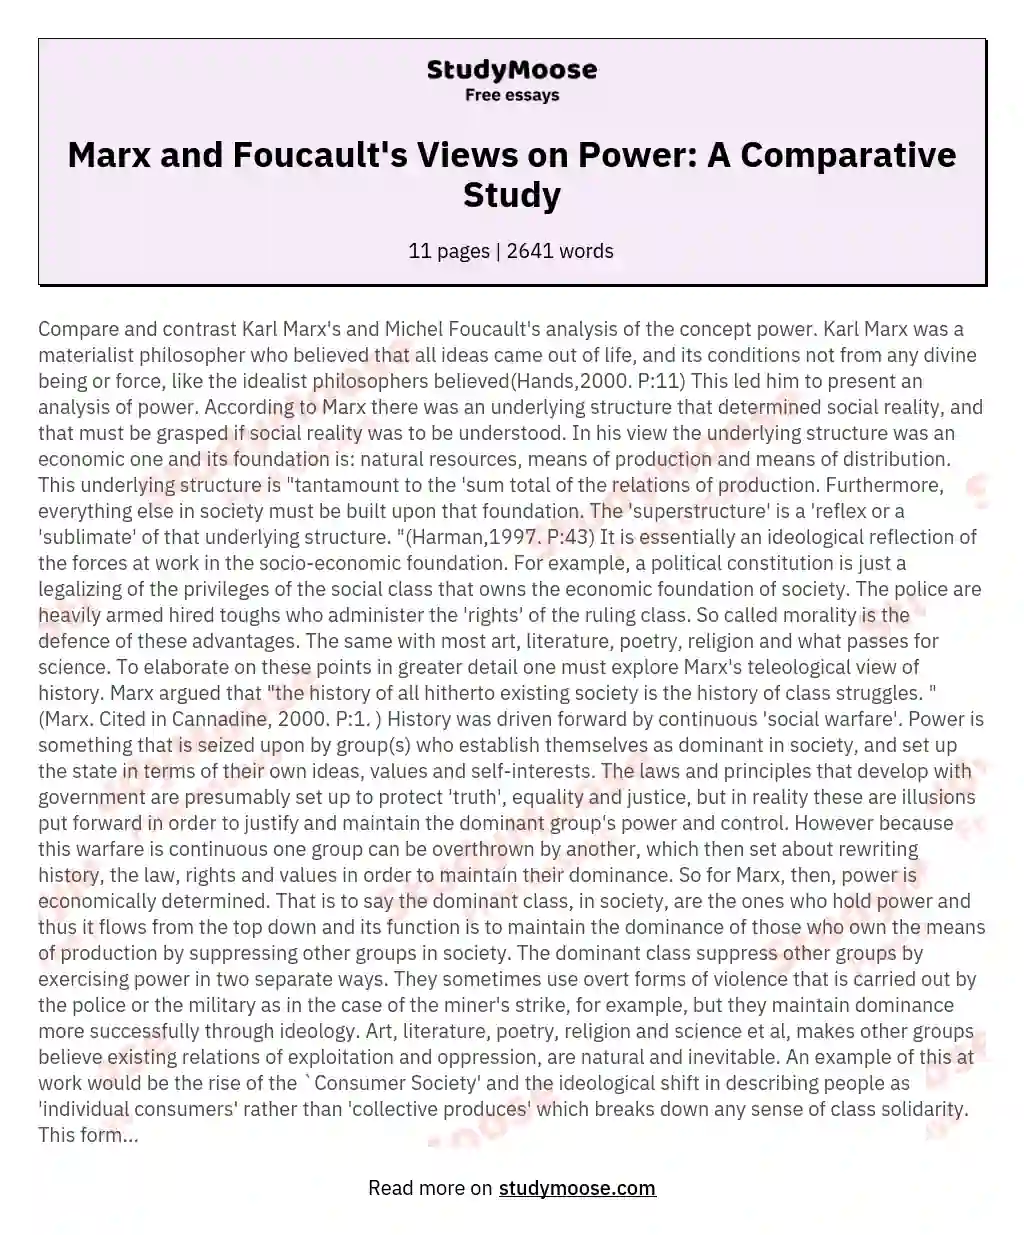 Marx and Foucault's Views on Power: A Comparative Study essay